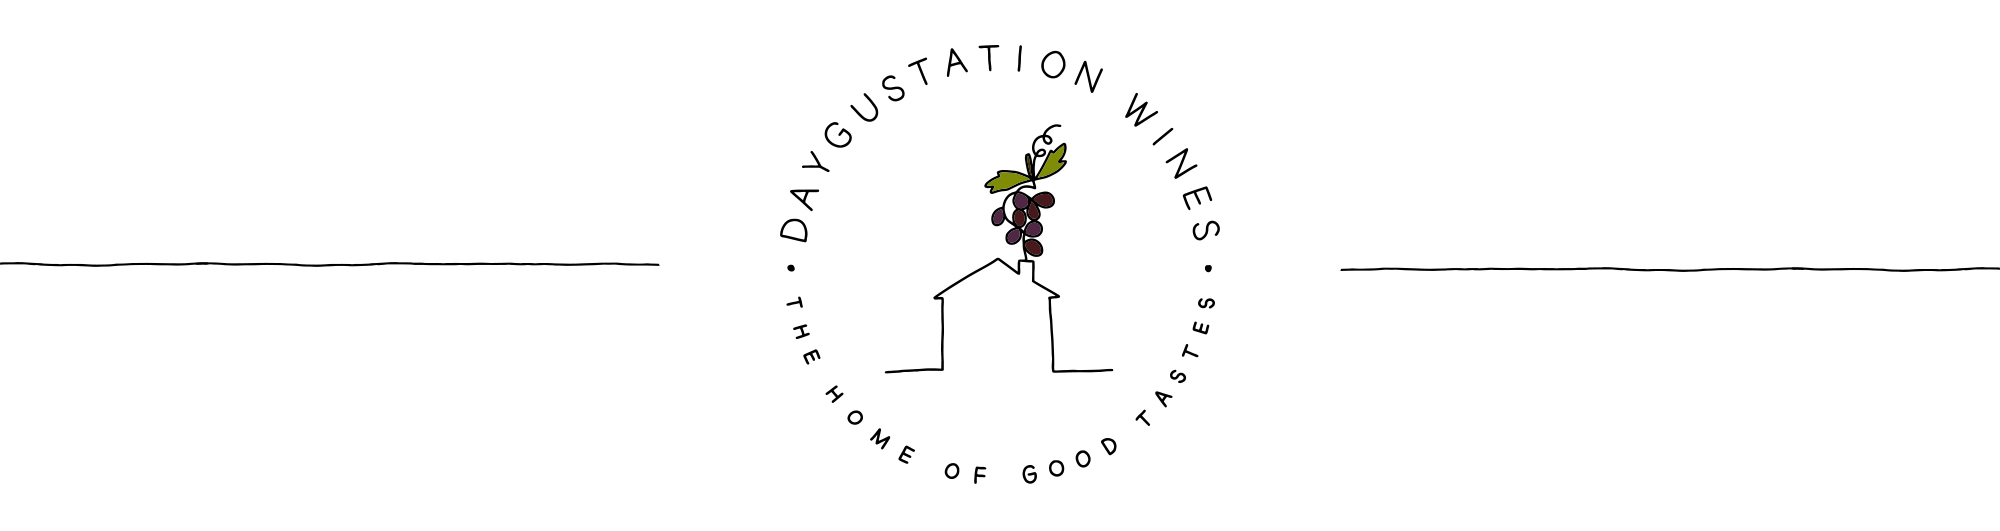 Daygustation Wines